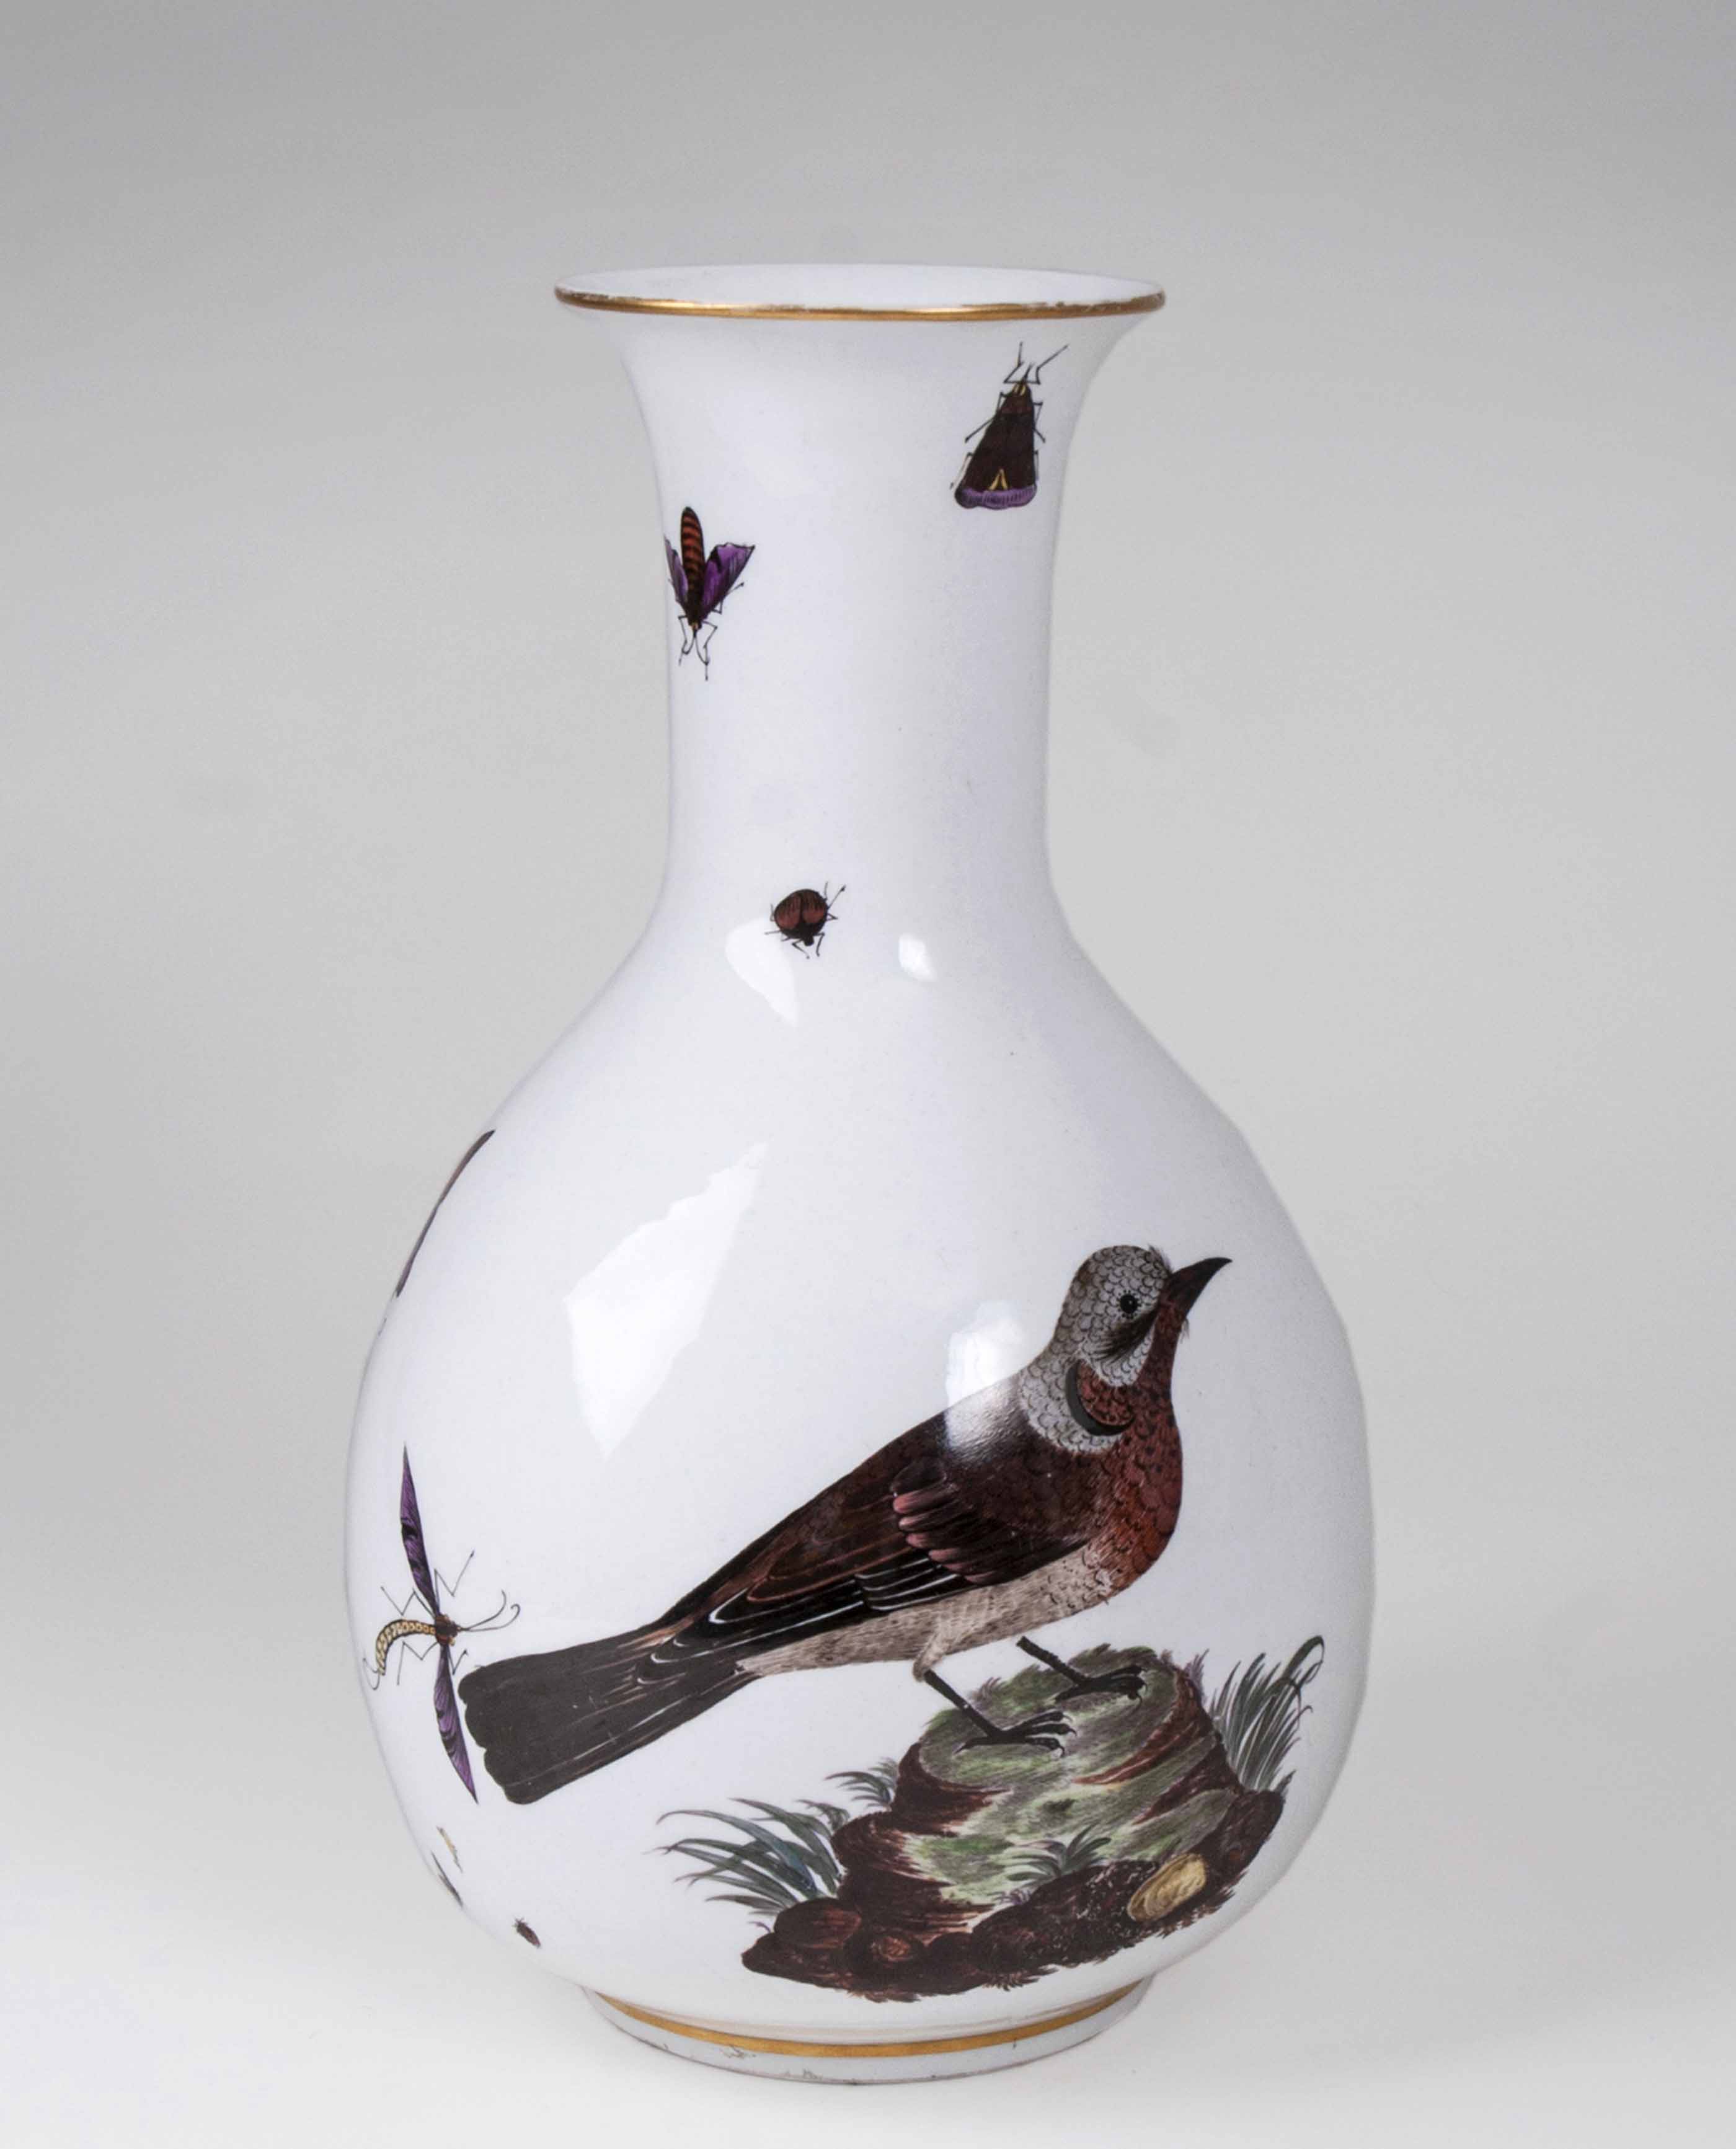 A very rare Augustus-Rex-vase with bird painting by C.G. Häntzschel - image 2